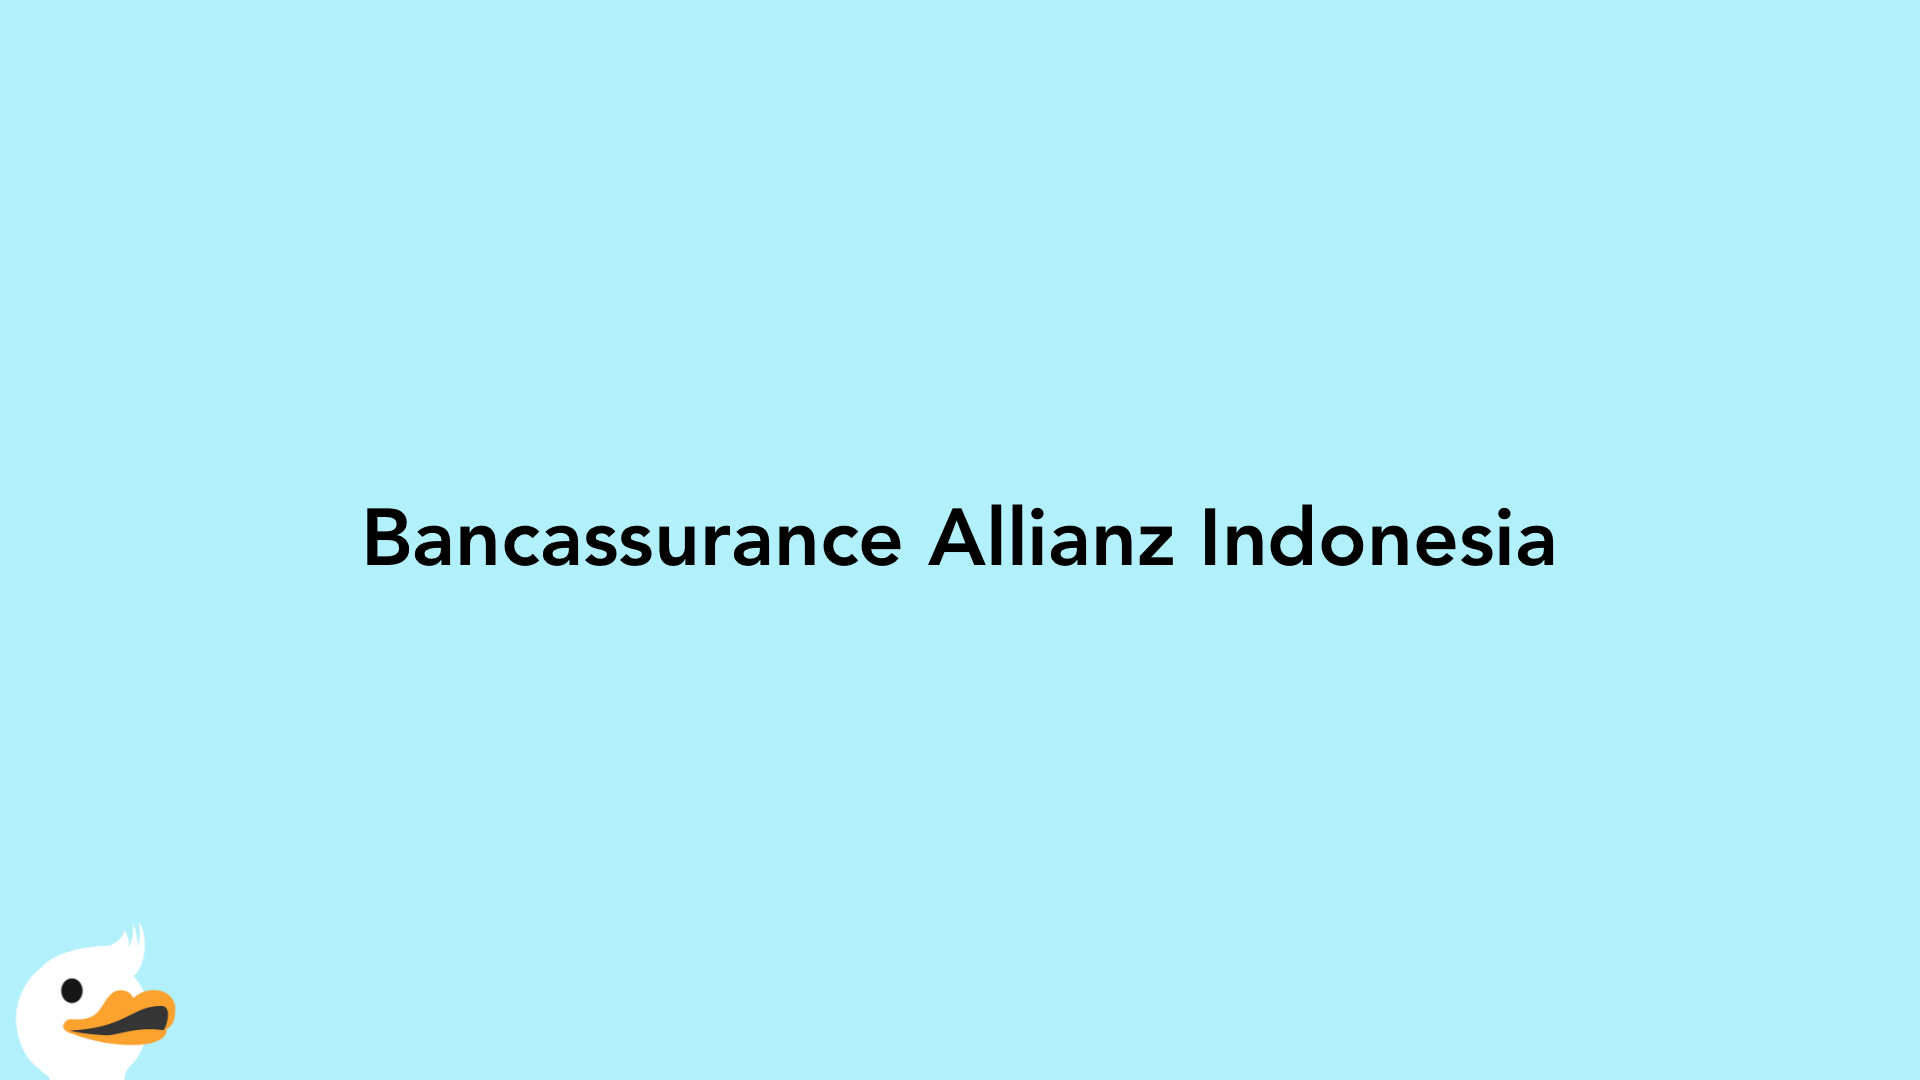 Bancassurance Allianz Indonesia